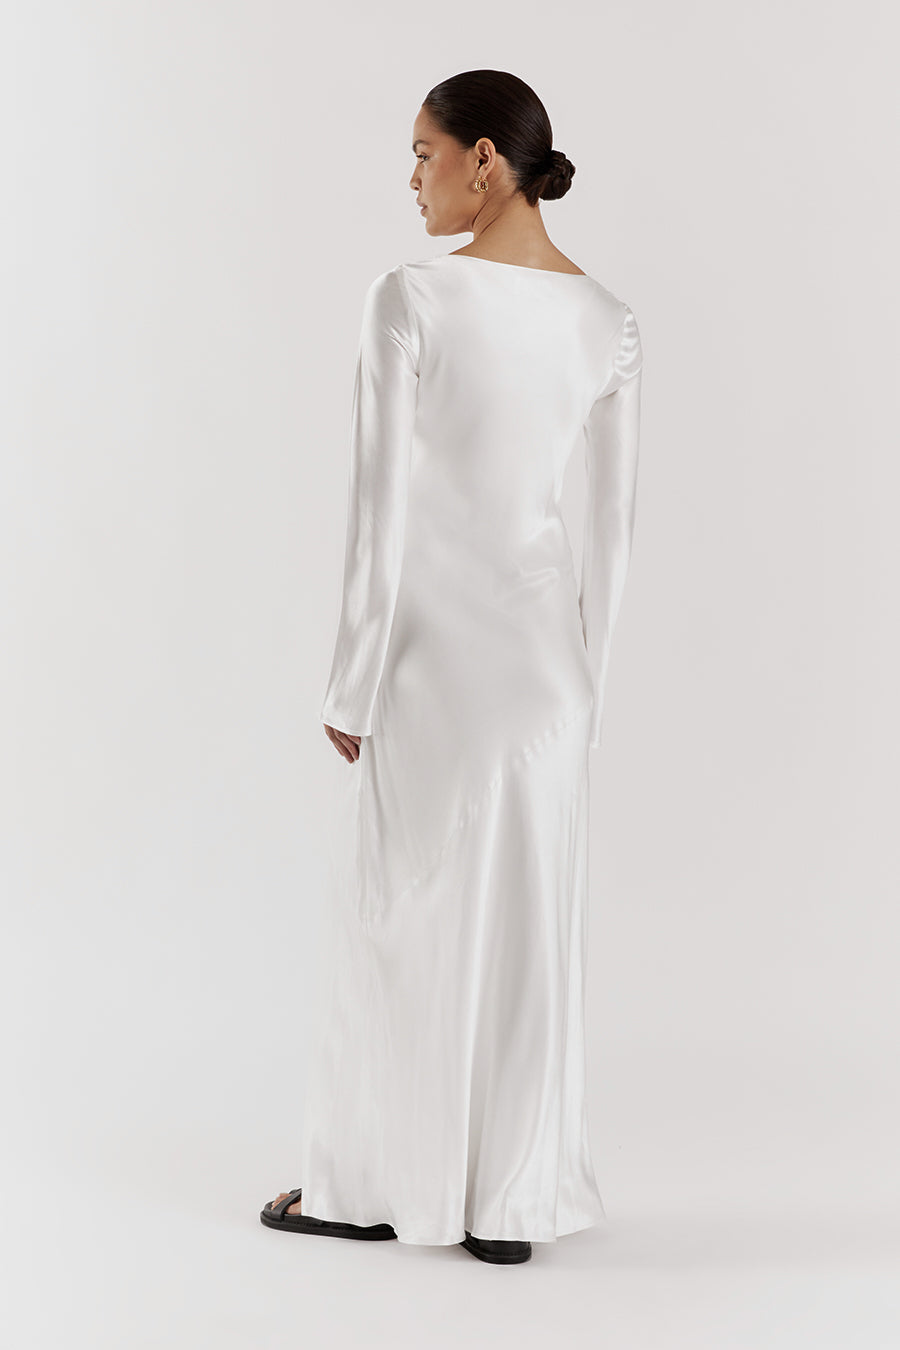 White Dresses | Short & Long White Dresses | Princess Polly USA